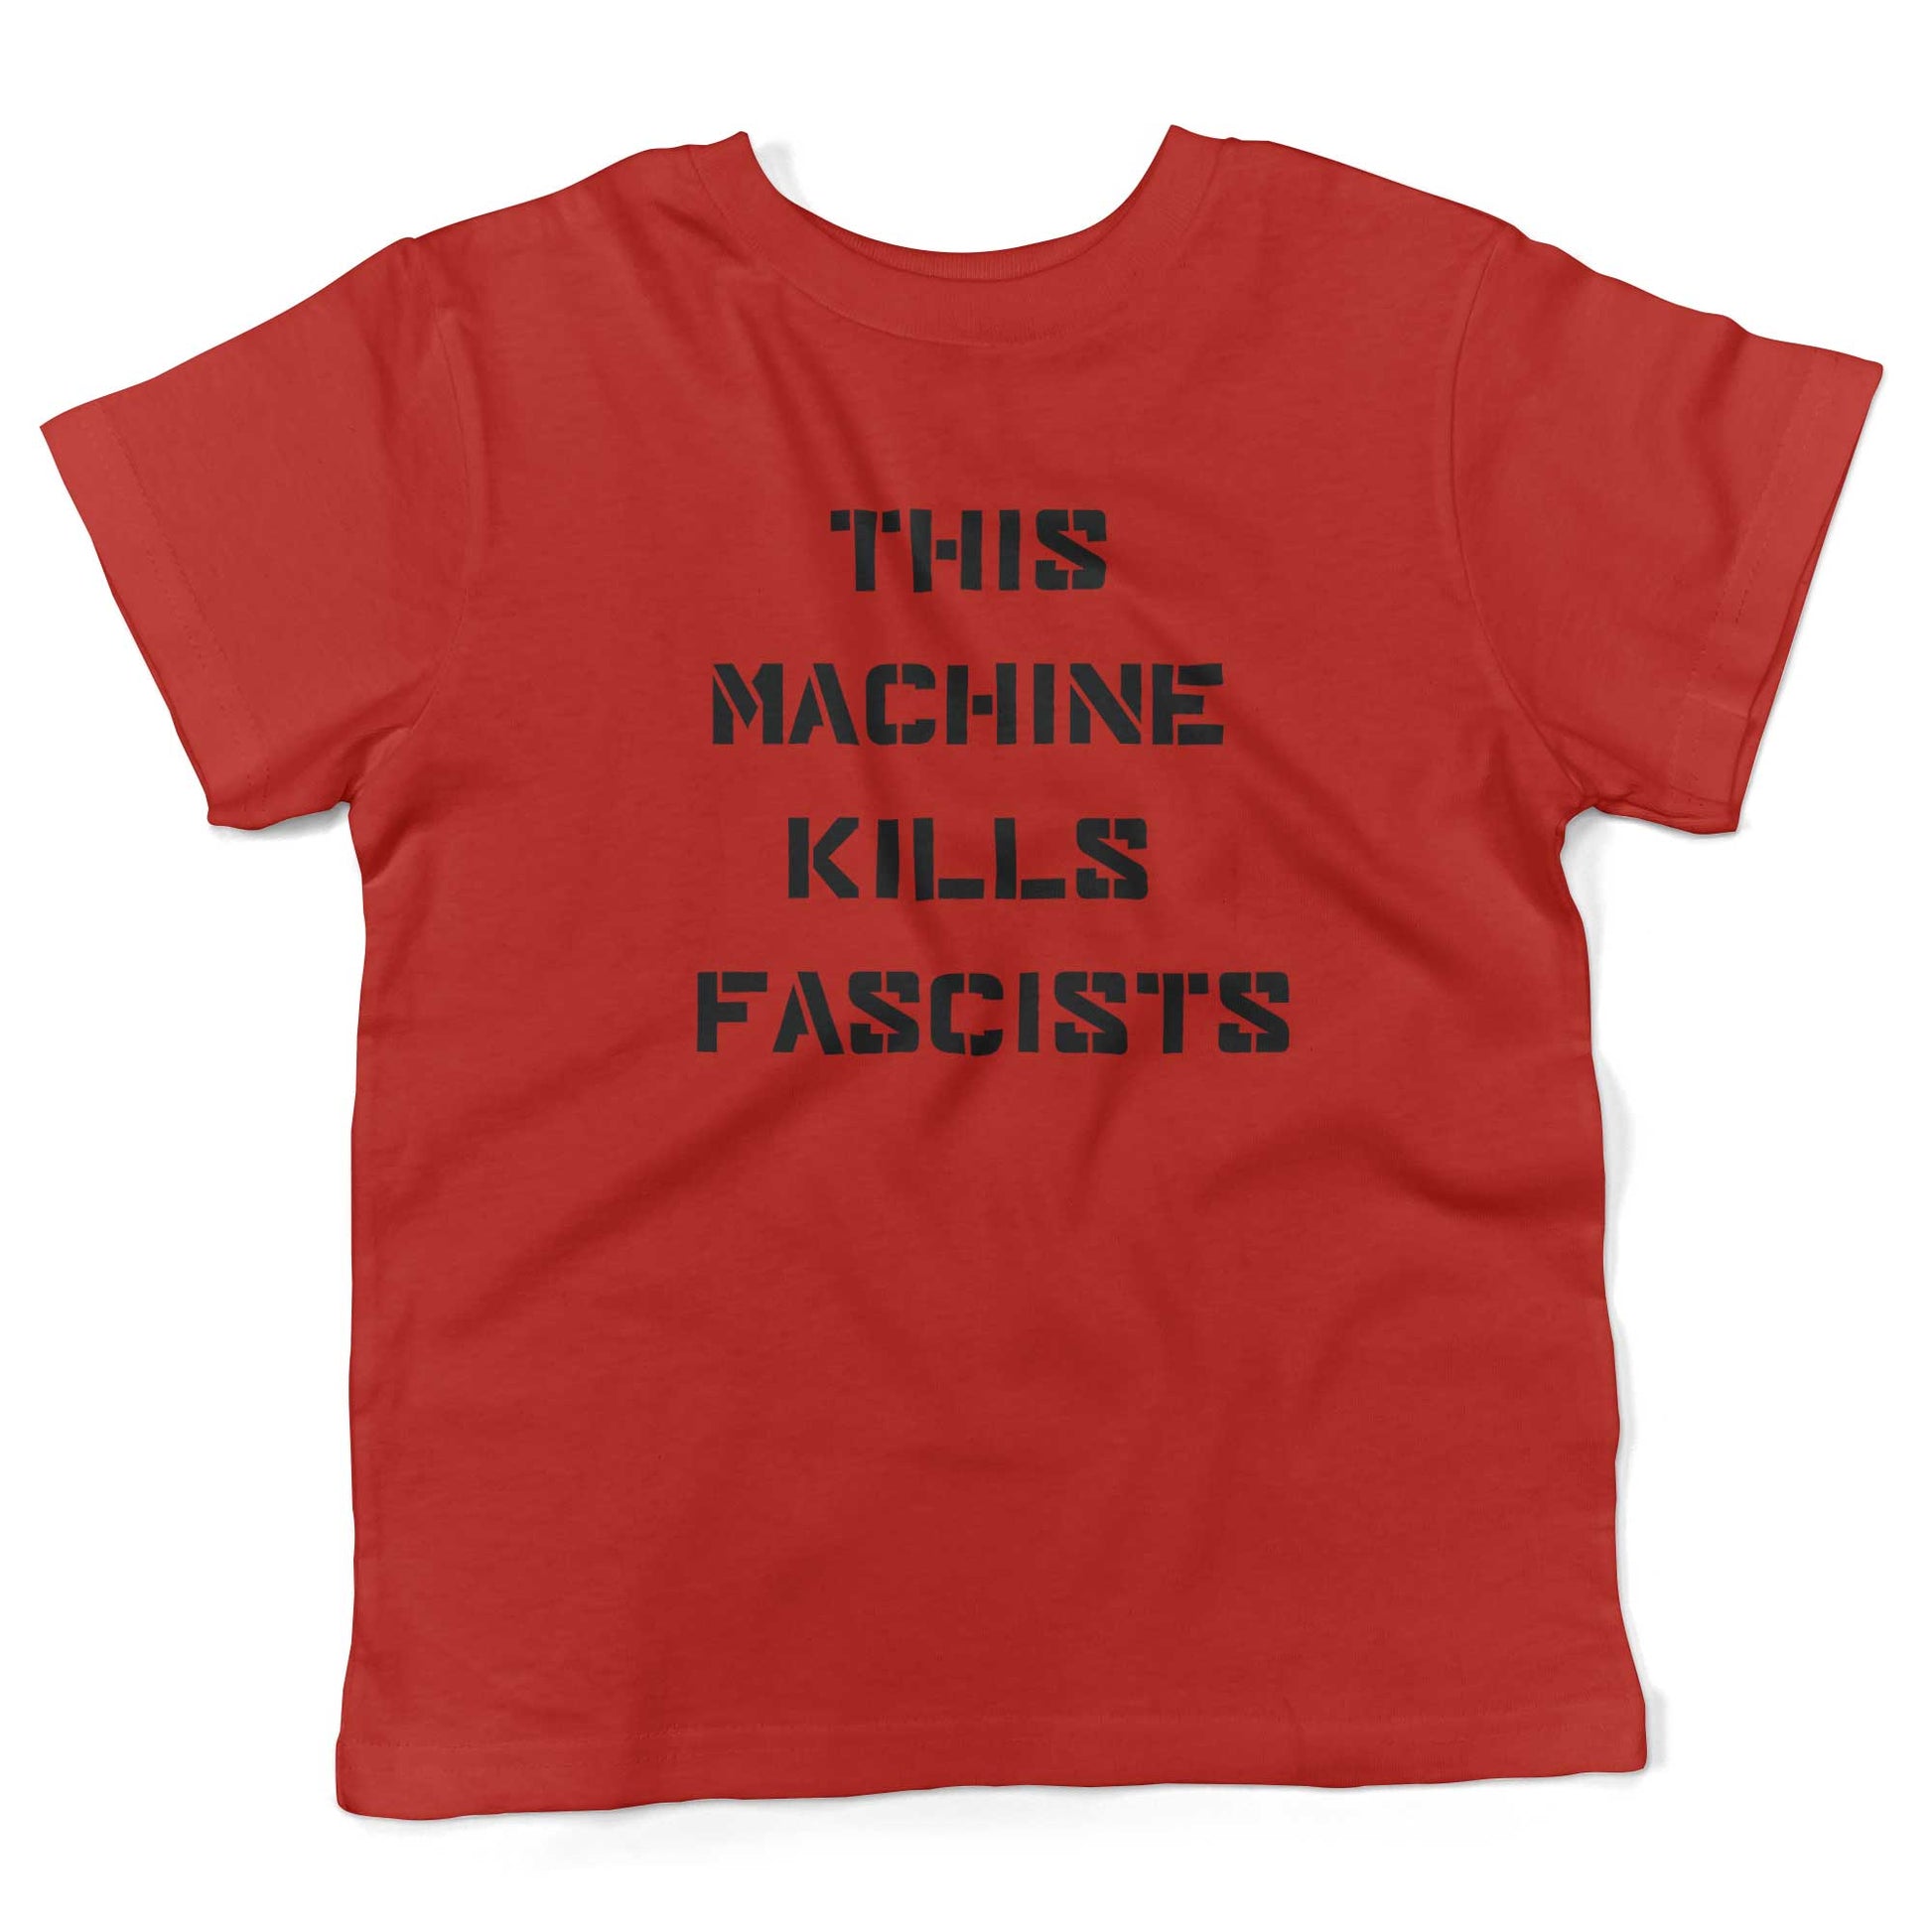 This Machine Kills Fascists Toddler Shirt-Red-2T